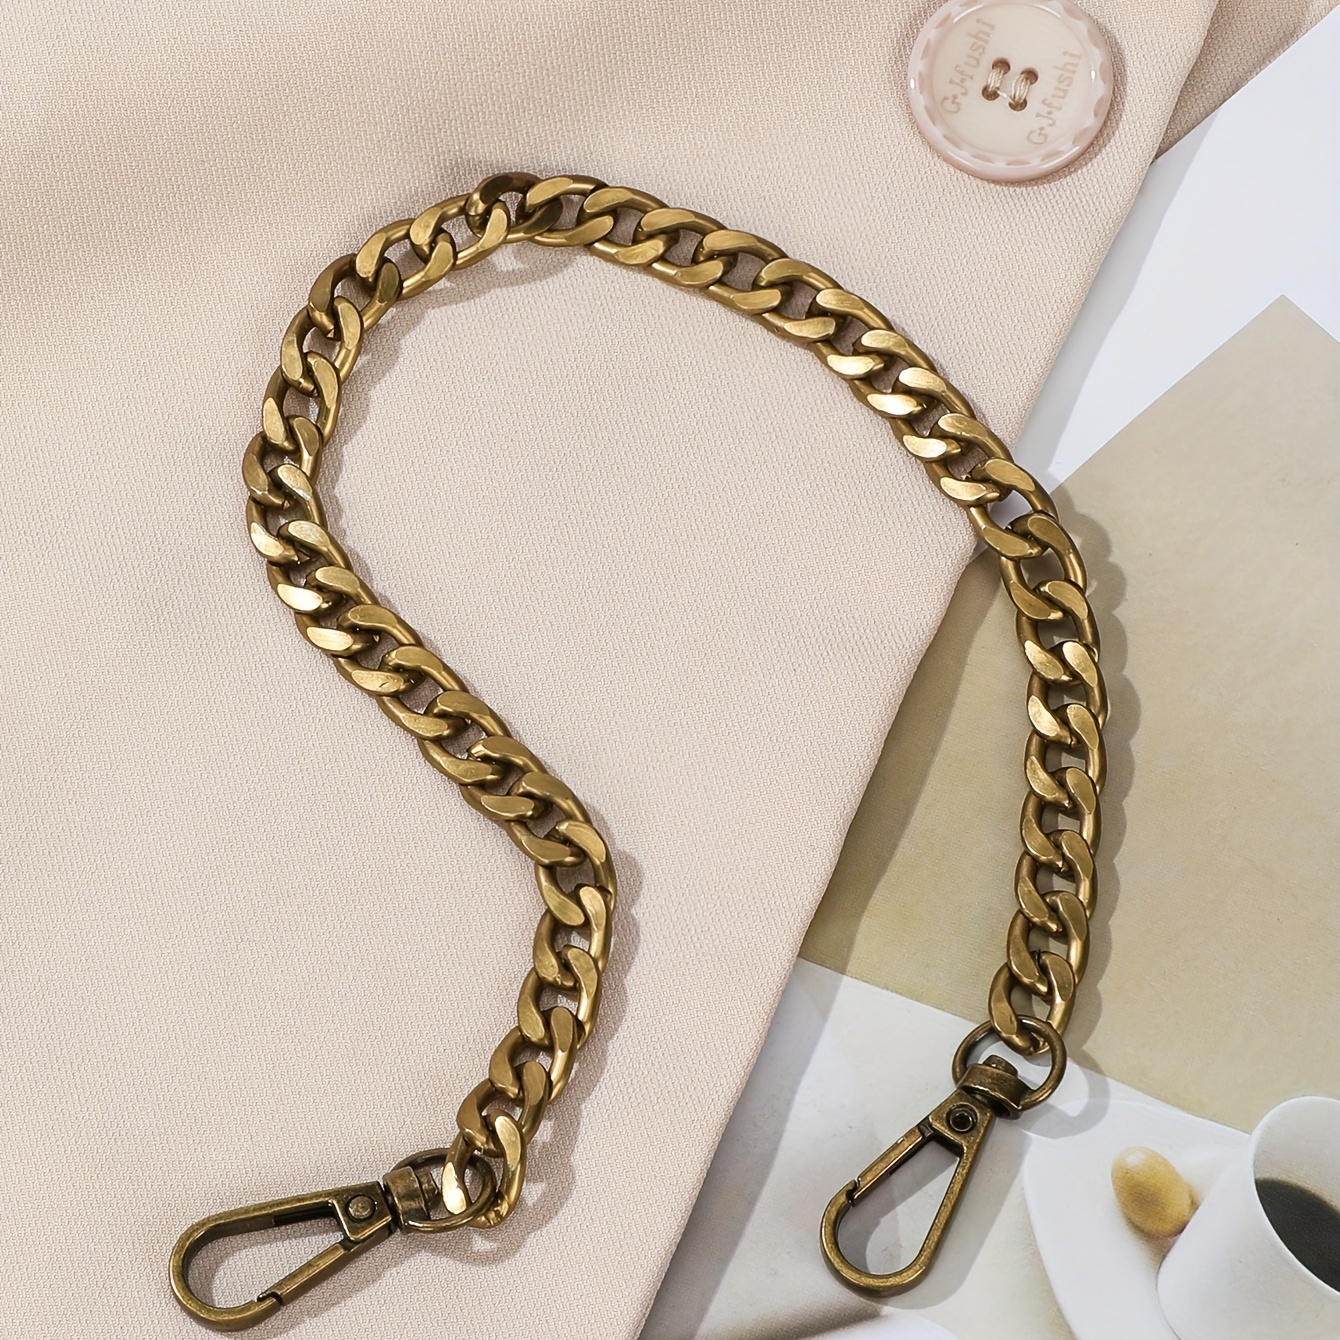 Next Fashion Purse Chain Strap Handle Shoulder Crossbody Metal Replacement 20cm - 120cm Selecting (Gold, 48 / 120cm)